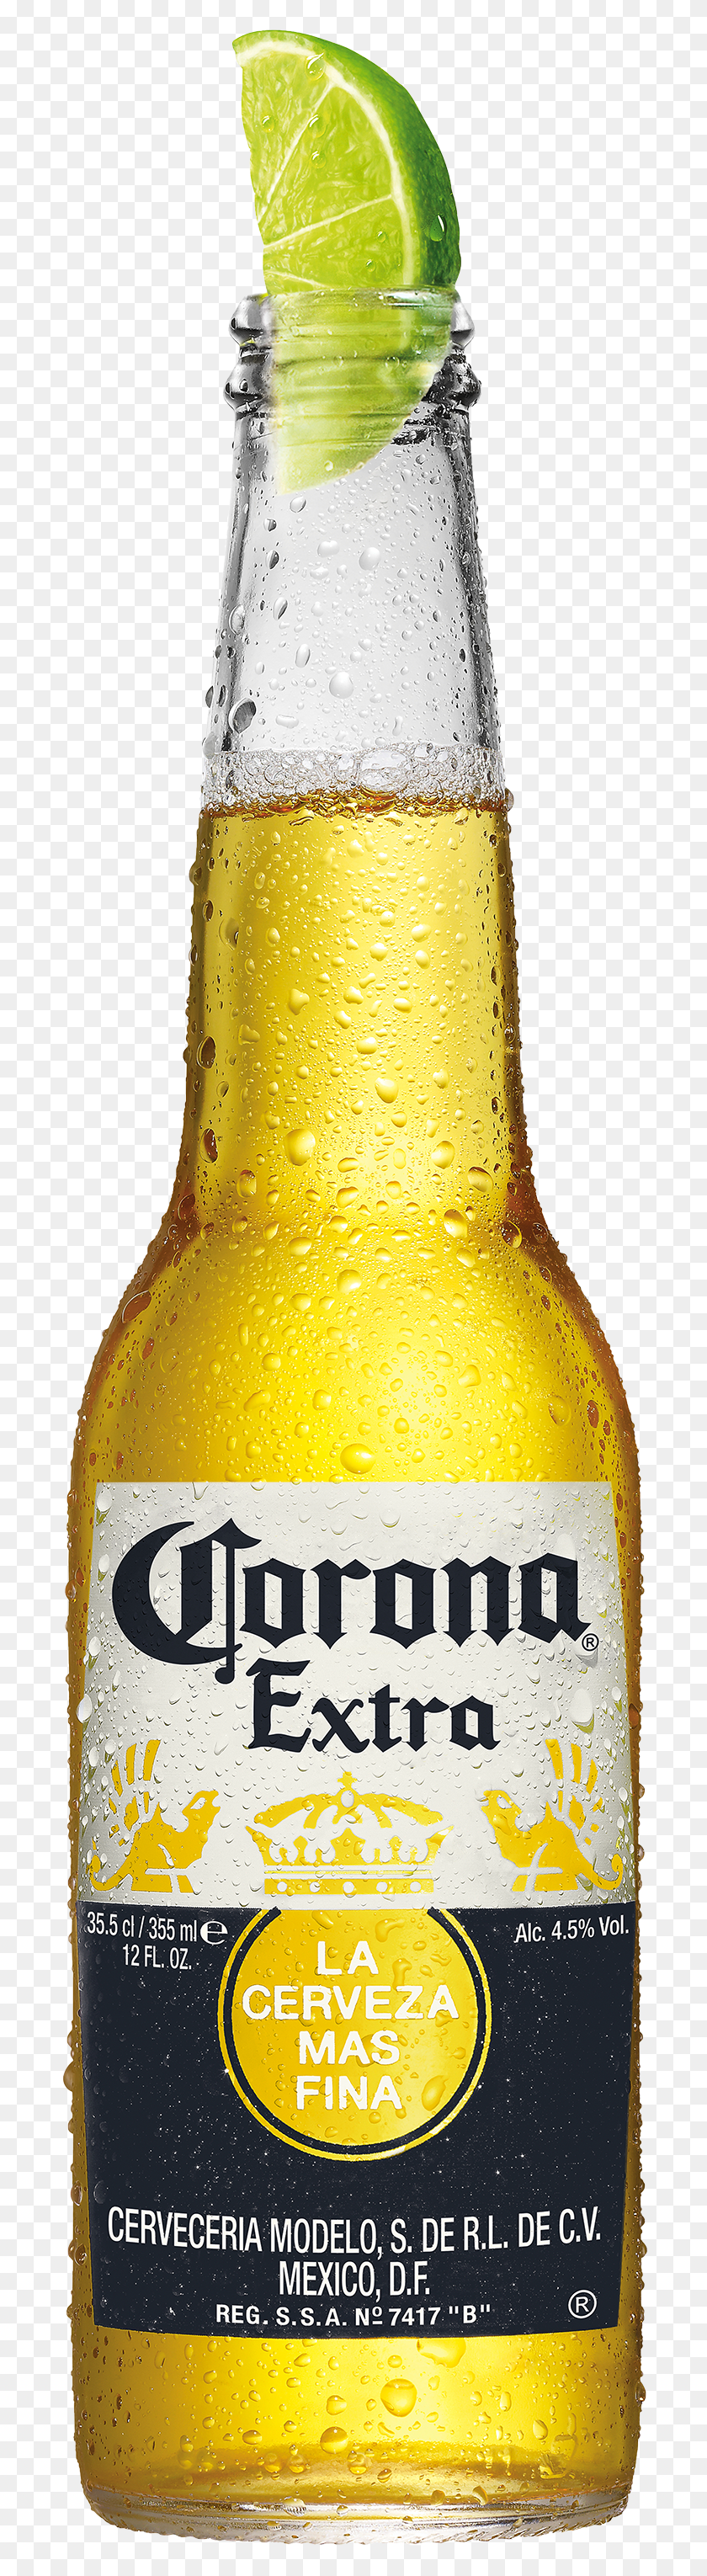 700x3000 Corona Extra Cerveza Pictures To Pin Corona Extra, Пиво, Алкоголь, Напитки Hd Png Скачать